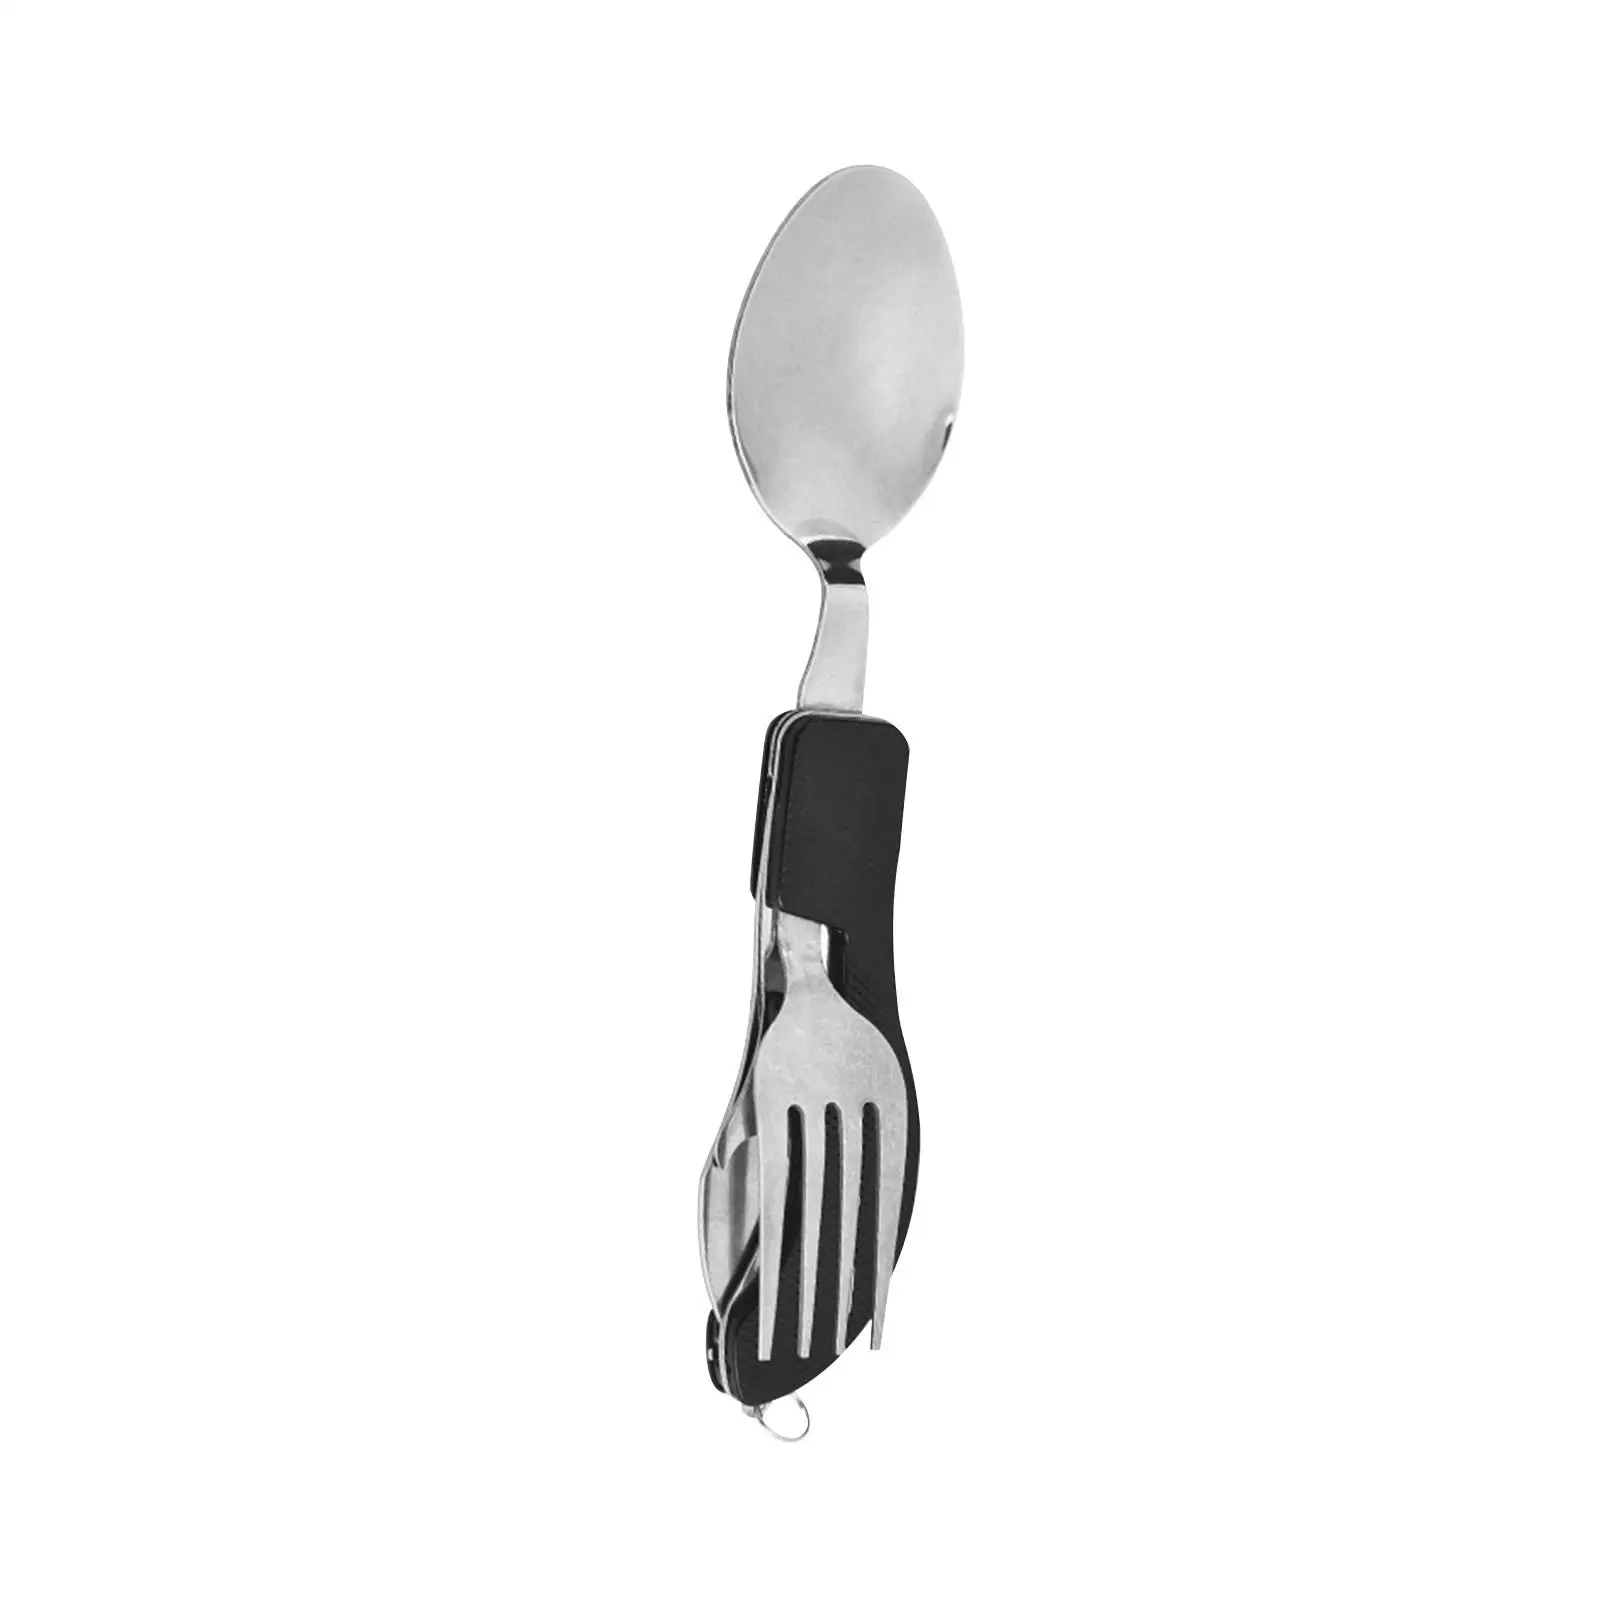 Premium in 1 Folding Cutlery, Detachable Tableware, Stainless Steel Camping Flatware Spoon and Bottle Opener